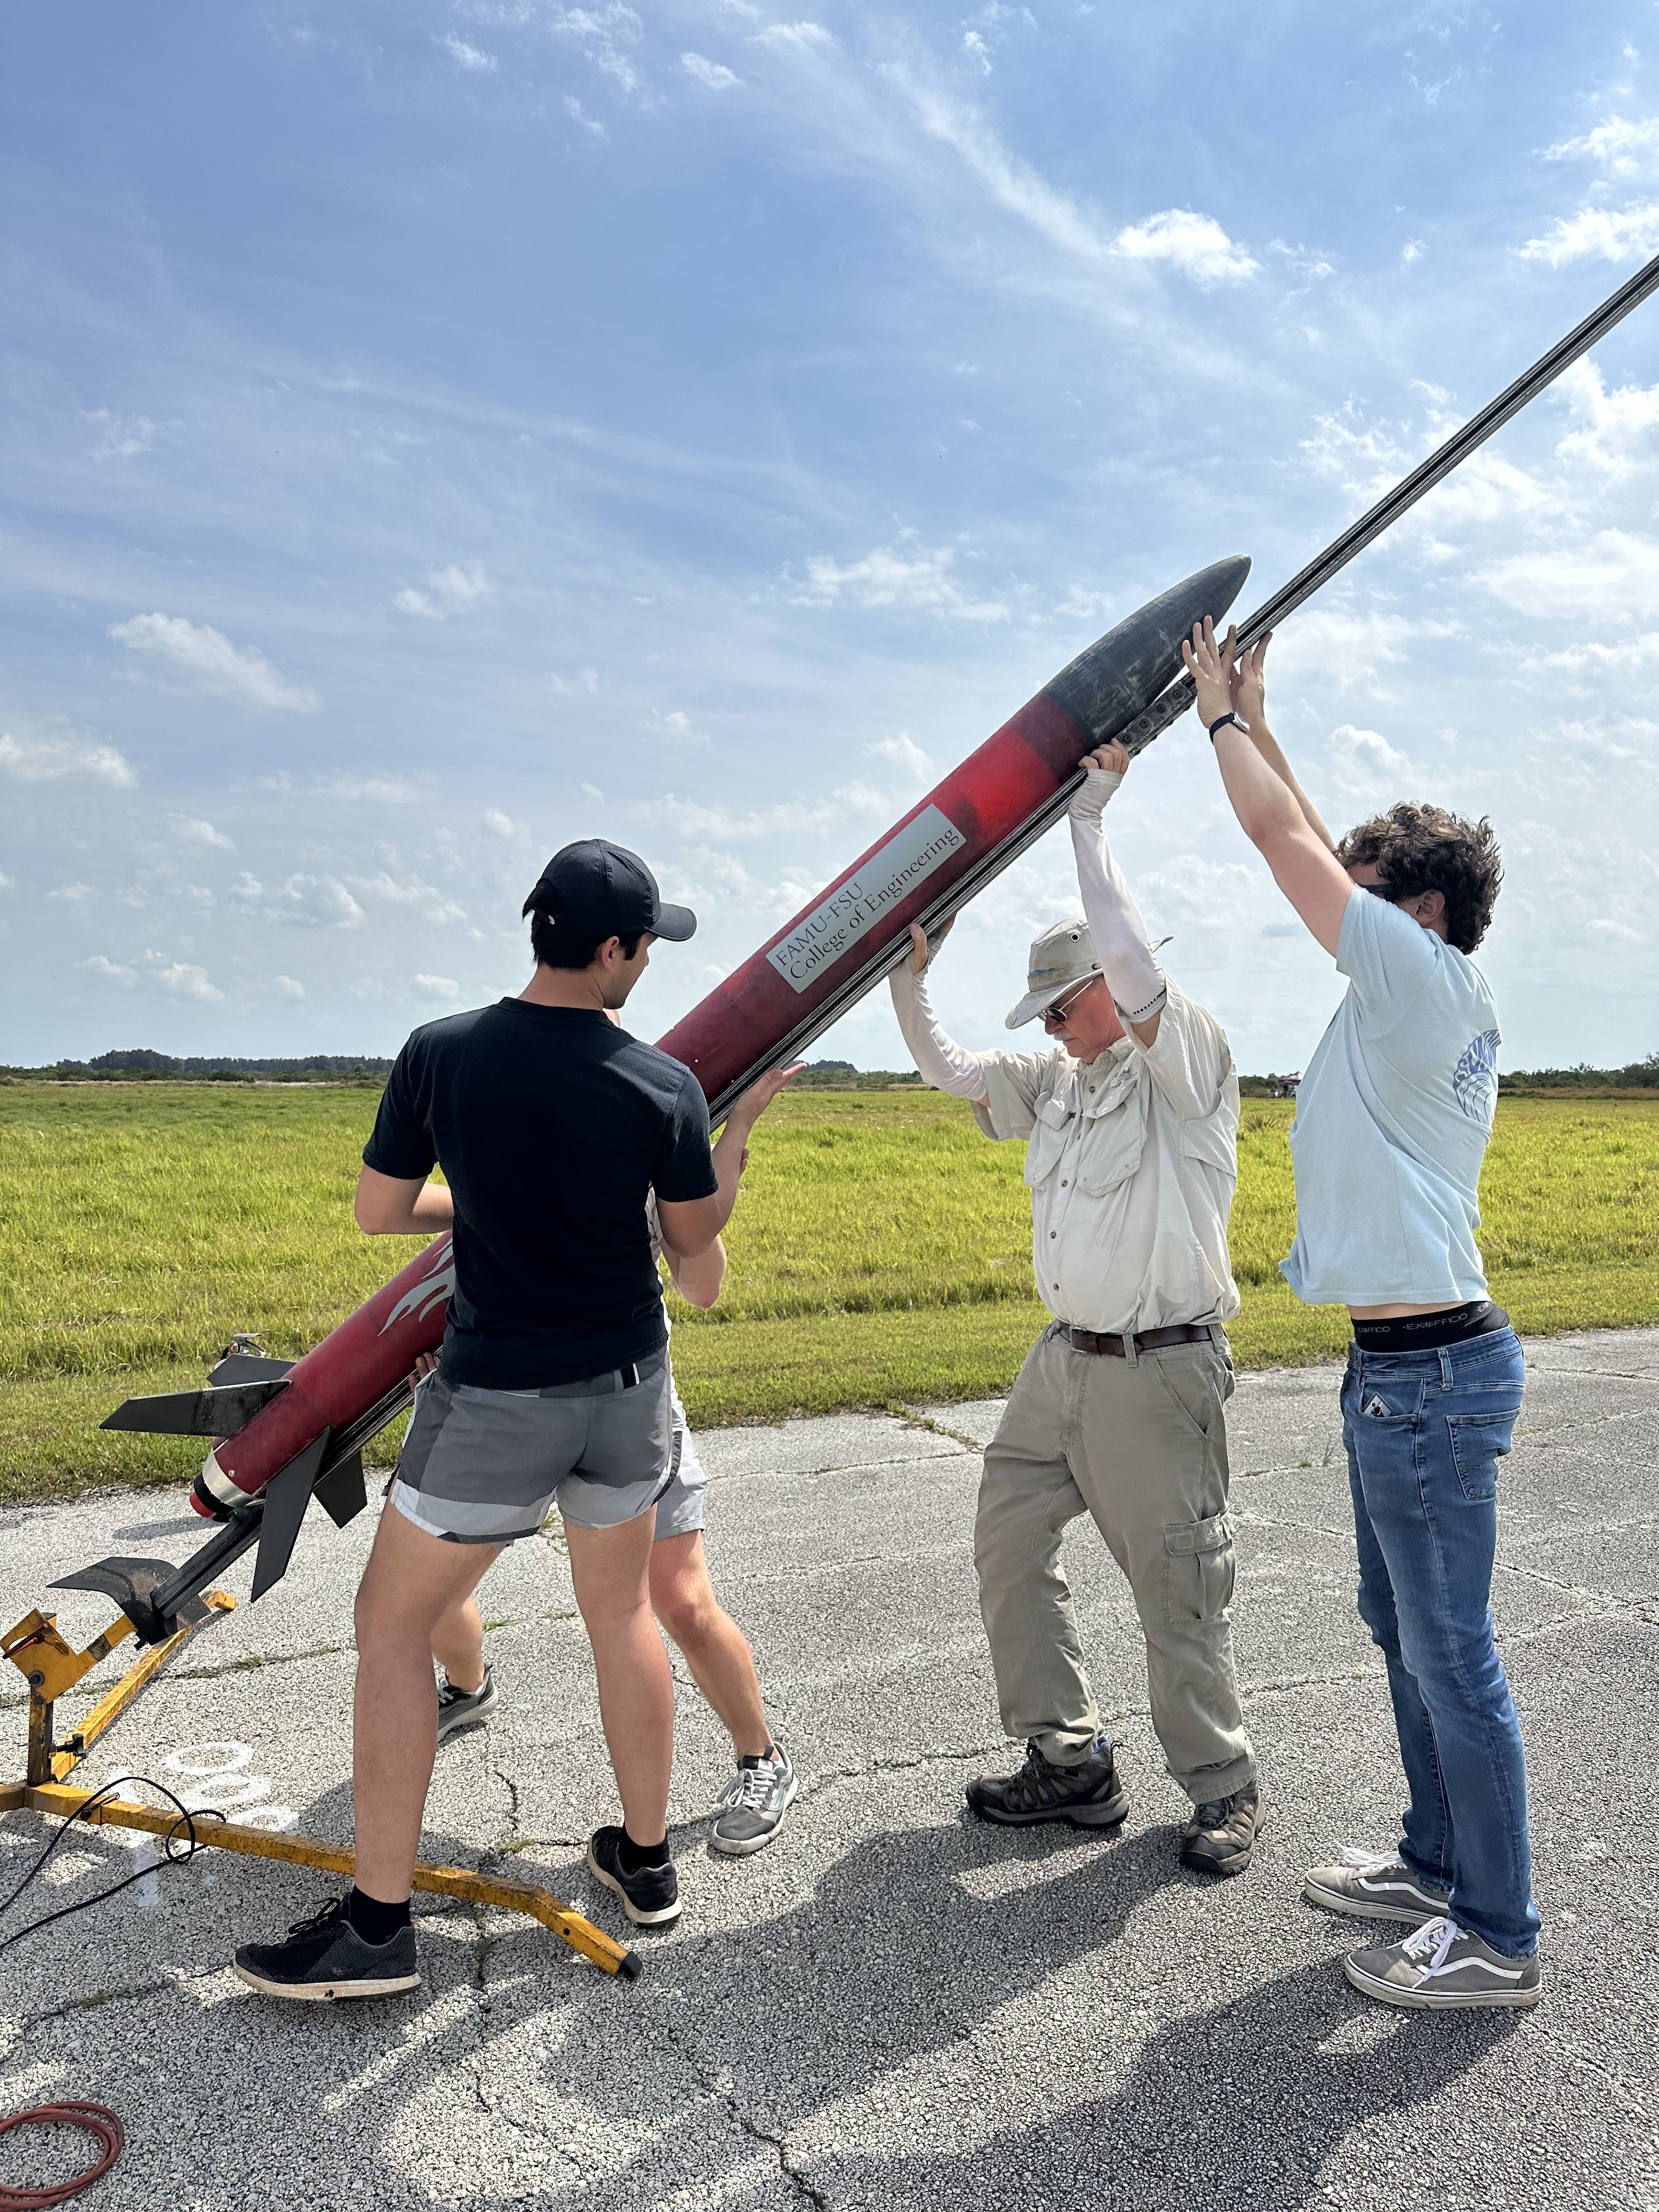 Team preparing the rocket before launch